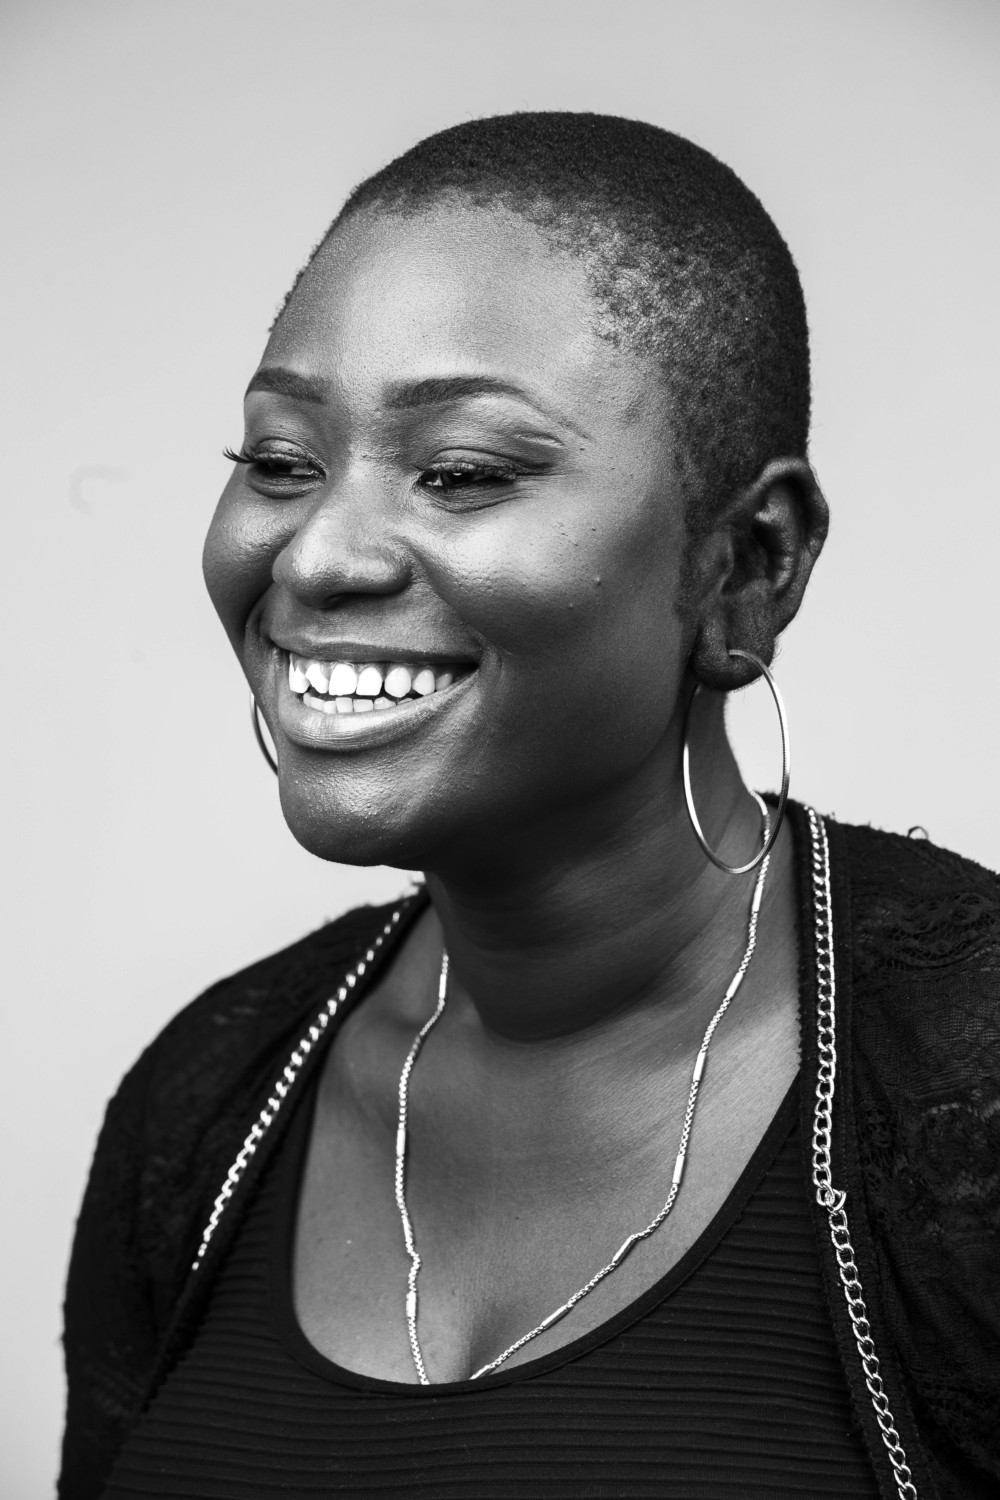 Jessica Gordon in "I Am" series by Chidera Muoka and Niyi Okeowo